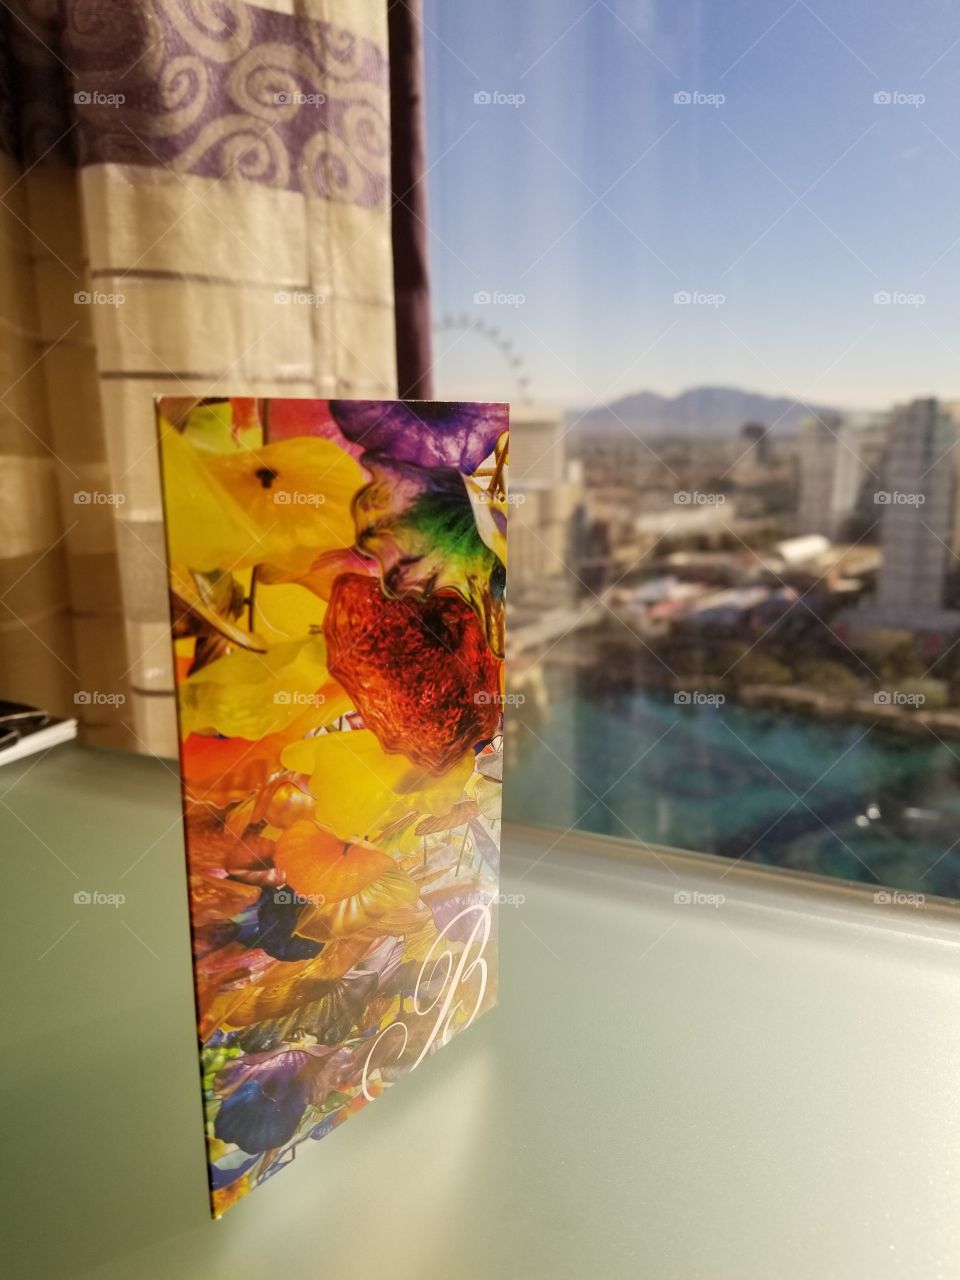 Bellagio room key card and view of Las Vegas